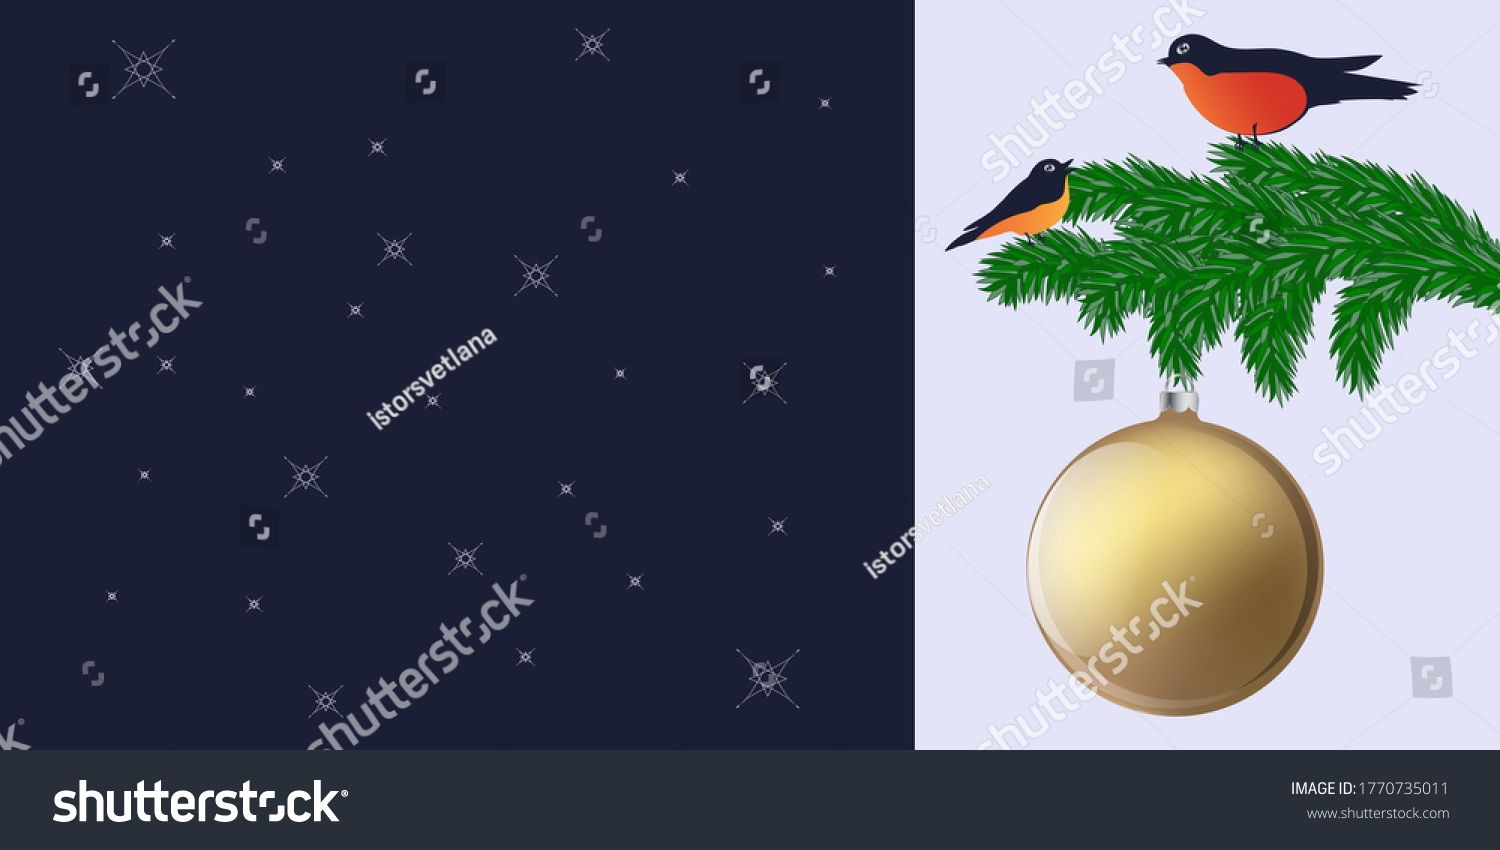 SVG of Fir tree branch, bullfinches, Christmas ball, shiny, - dark blue background - vector. Banner. Christmas decoration. Winter holidays svg